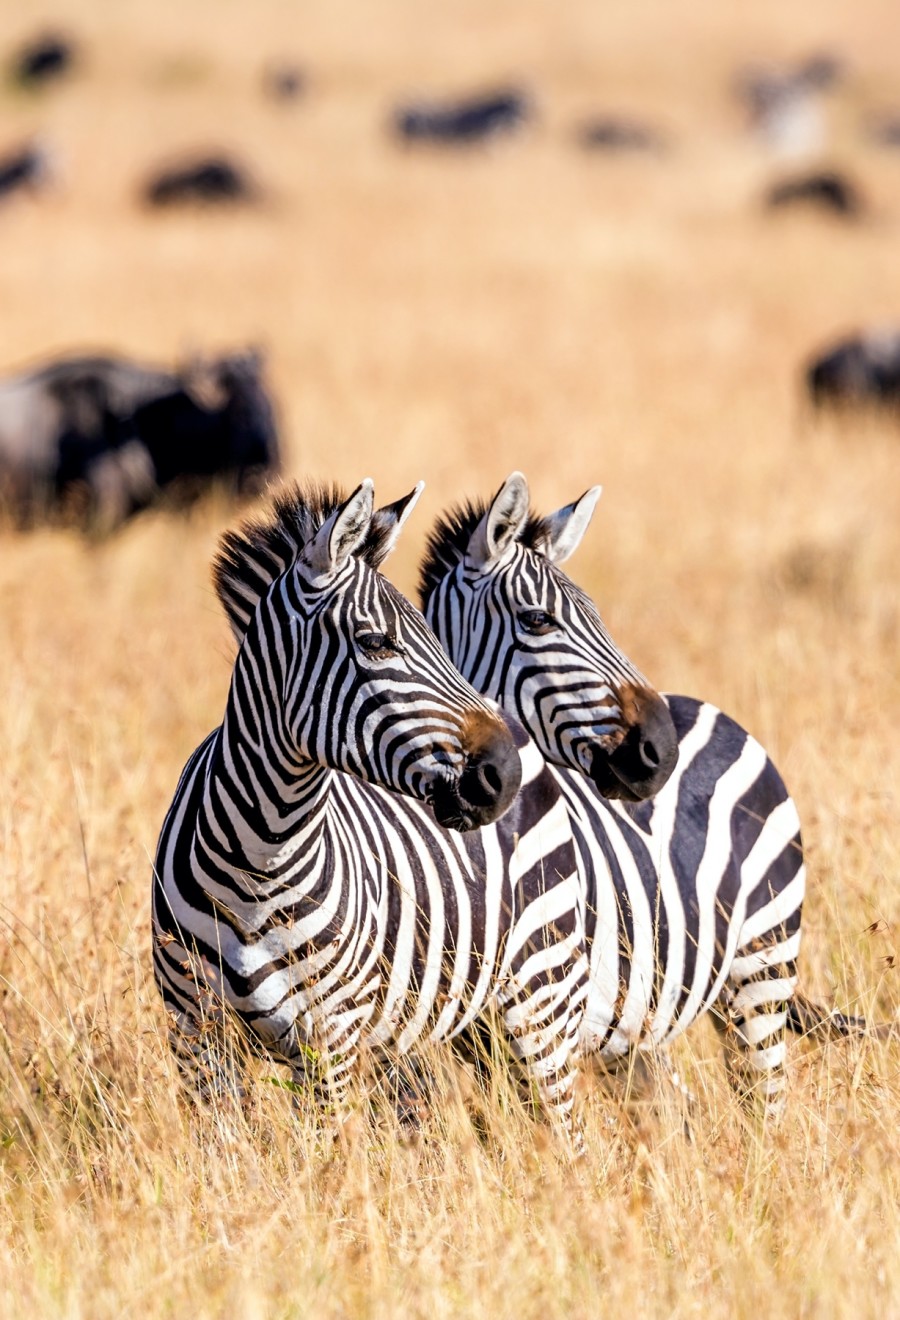 Two Zebras Standing in Grassy Field on Game Safari in Botswana - ROAR AFRICA